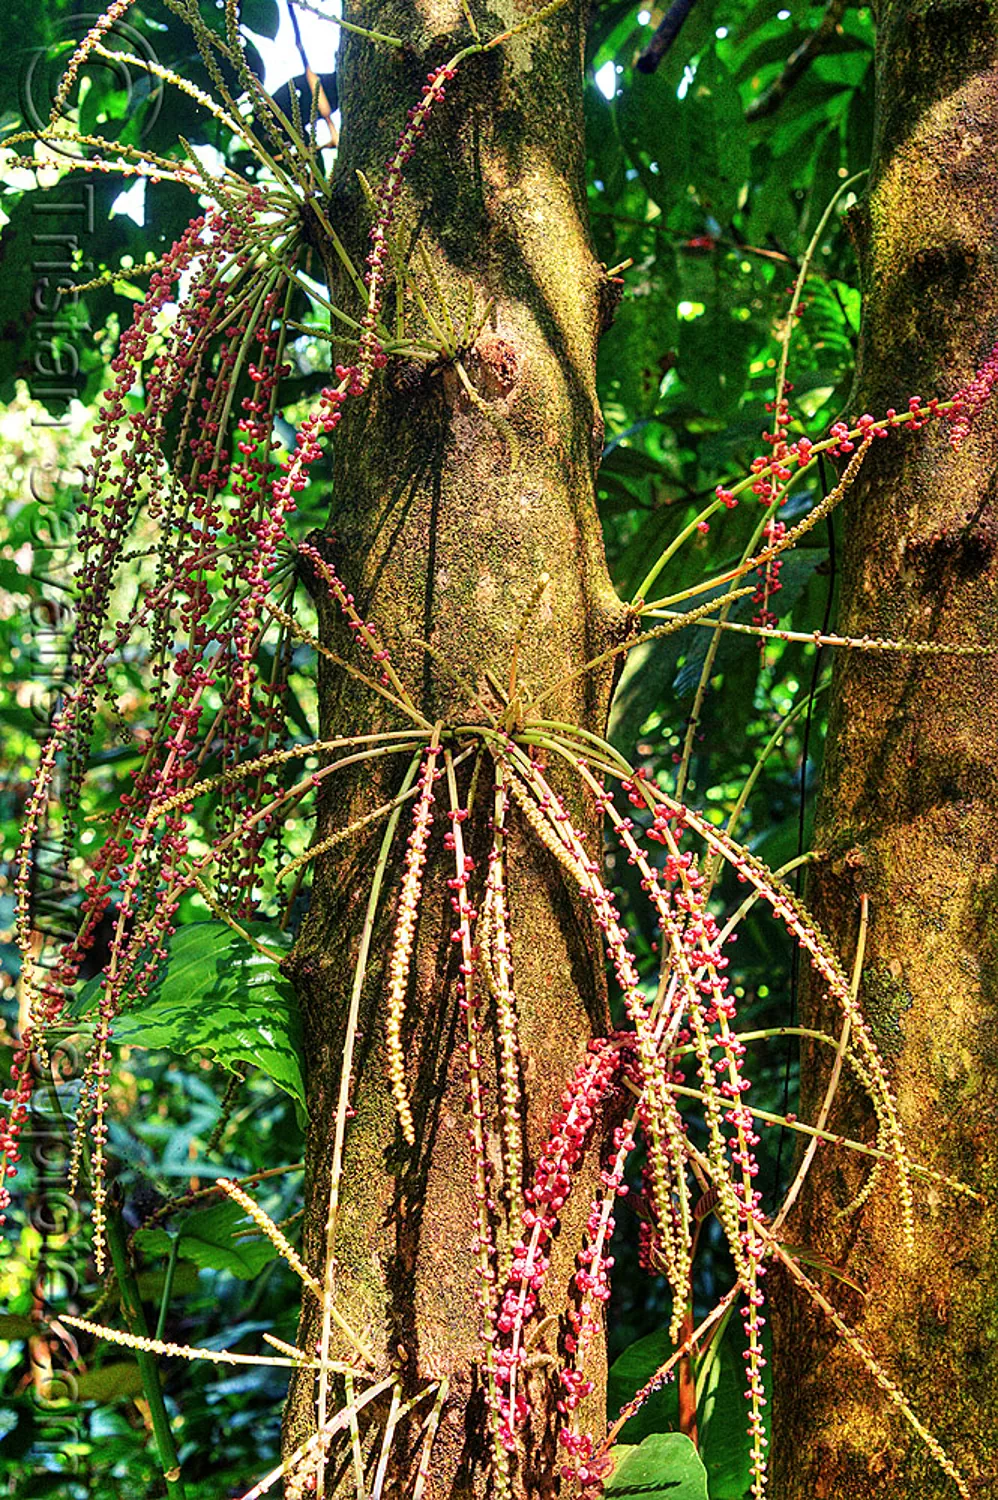 flowers on tropical tree trunk - baccaurea, baccaurea courtallensis, borneo, flowers, gunung mulu national park, inflorescences, jungle, malaysia, plants, rain forest, tree, trunk